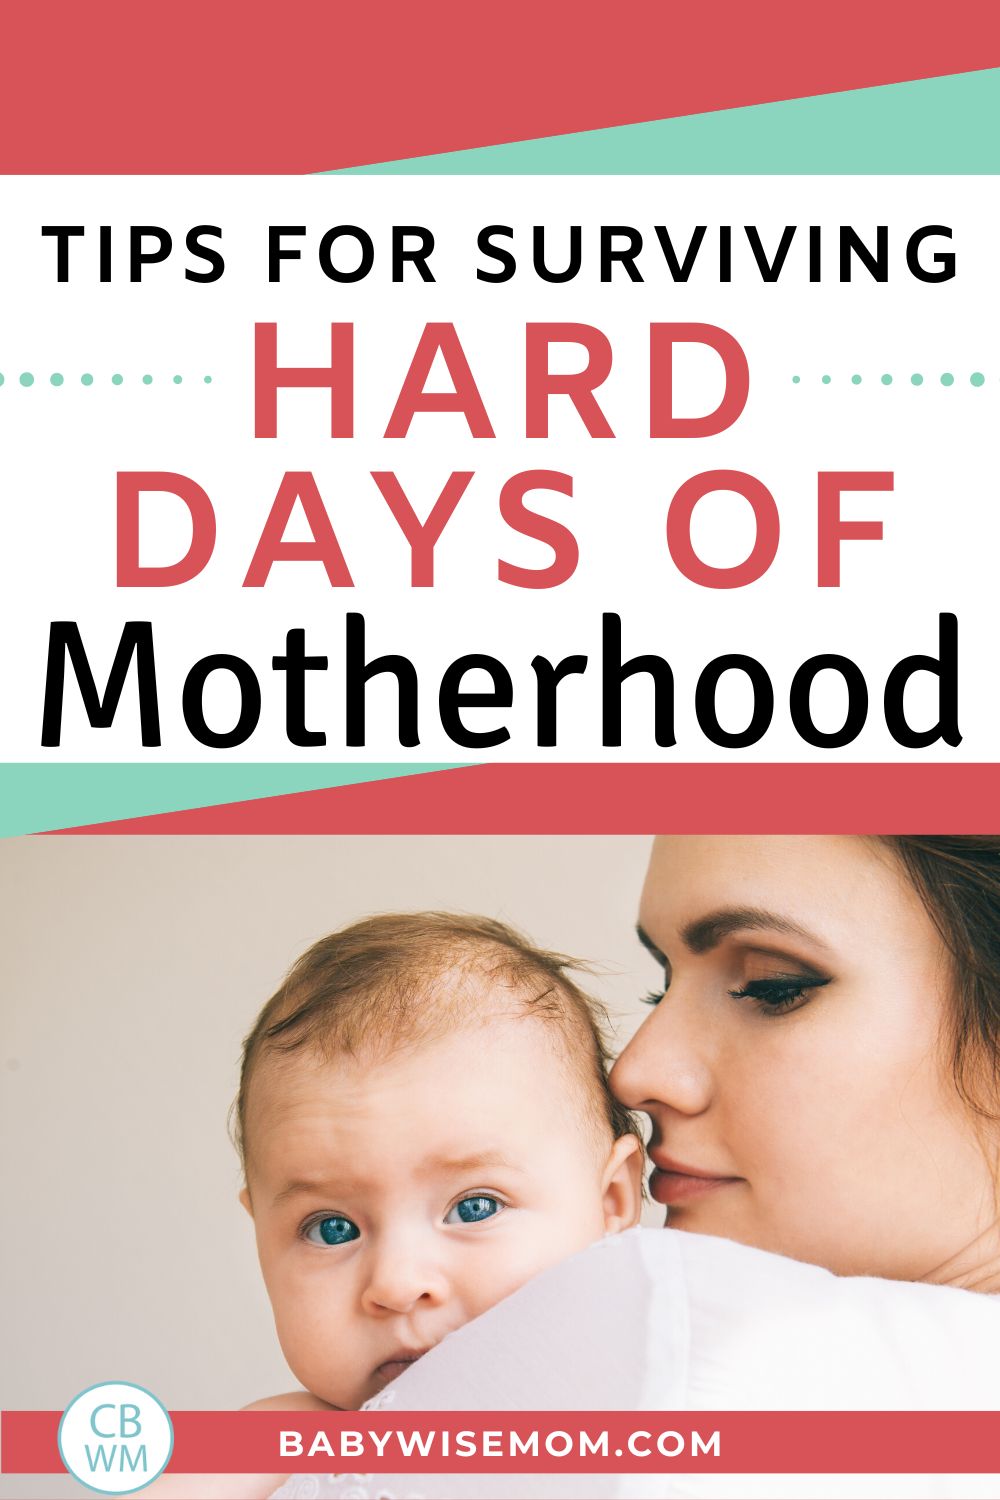 Surviving hard days of motherhood